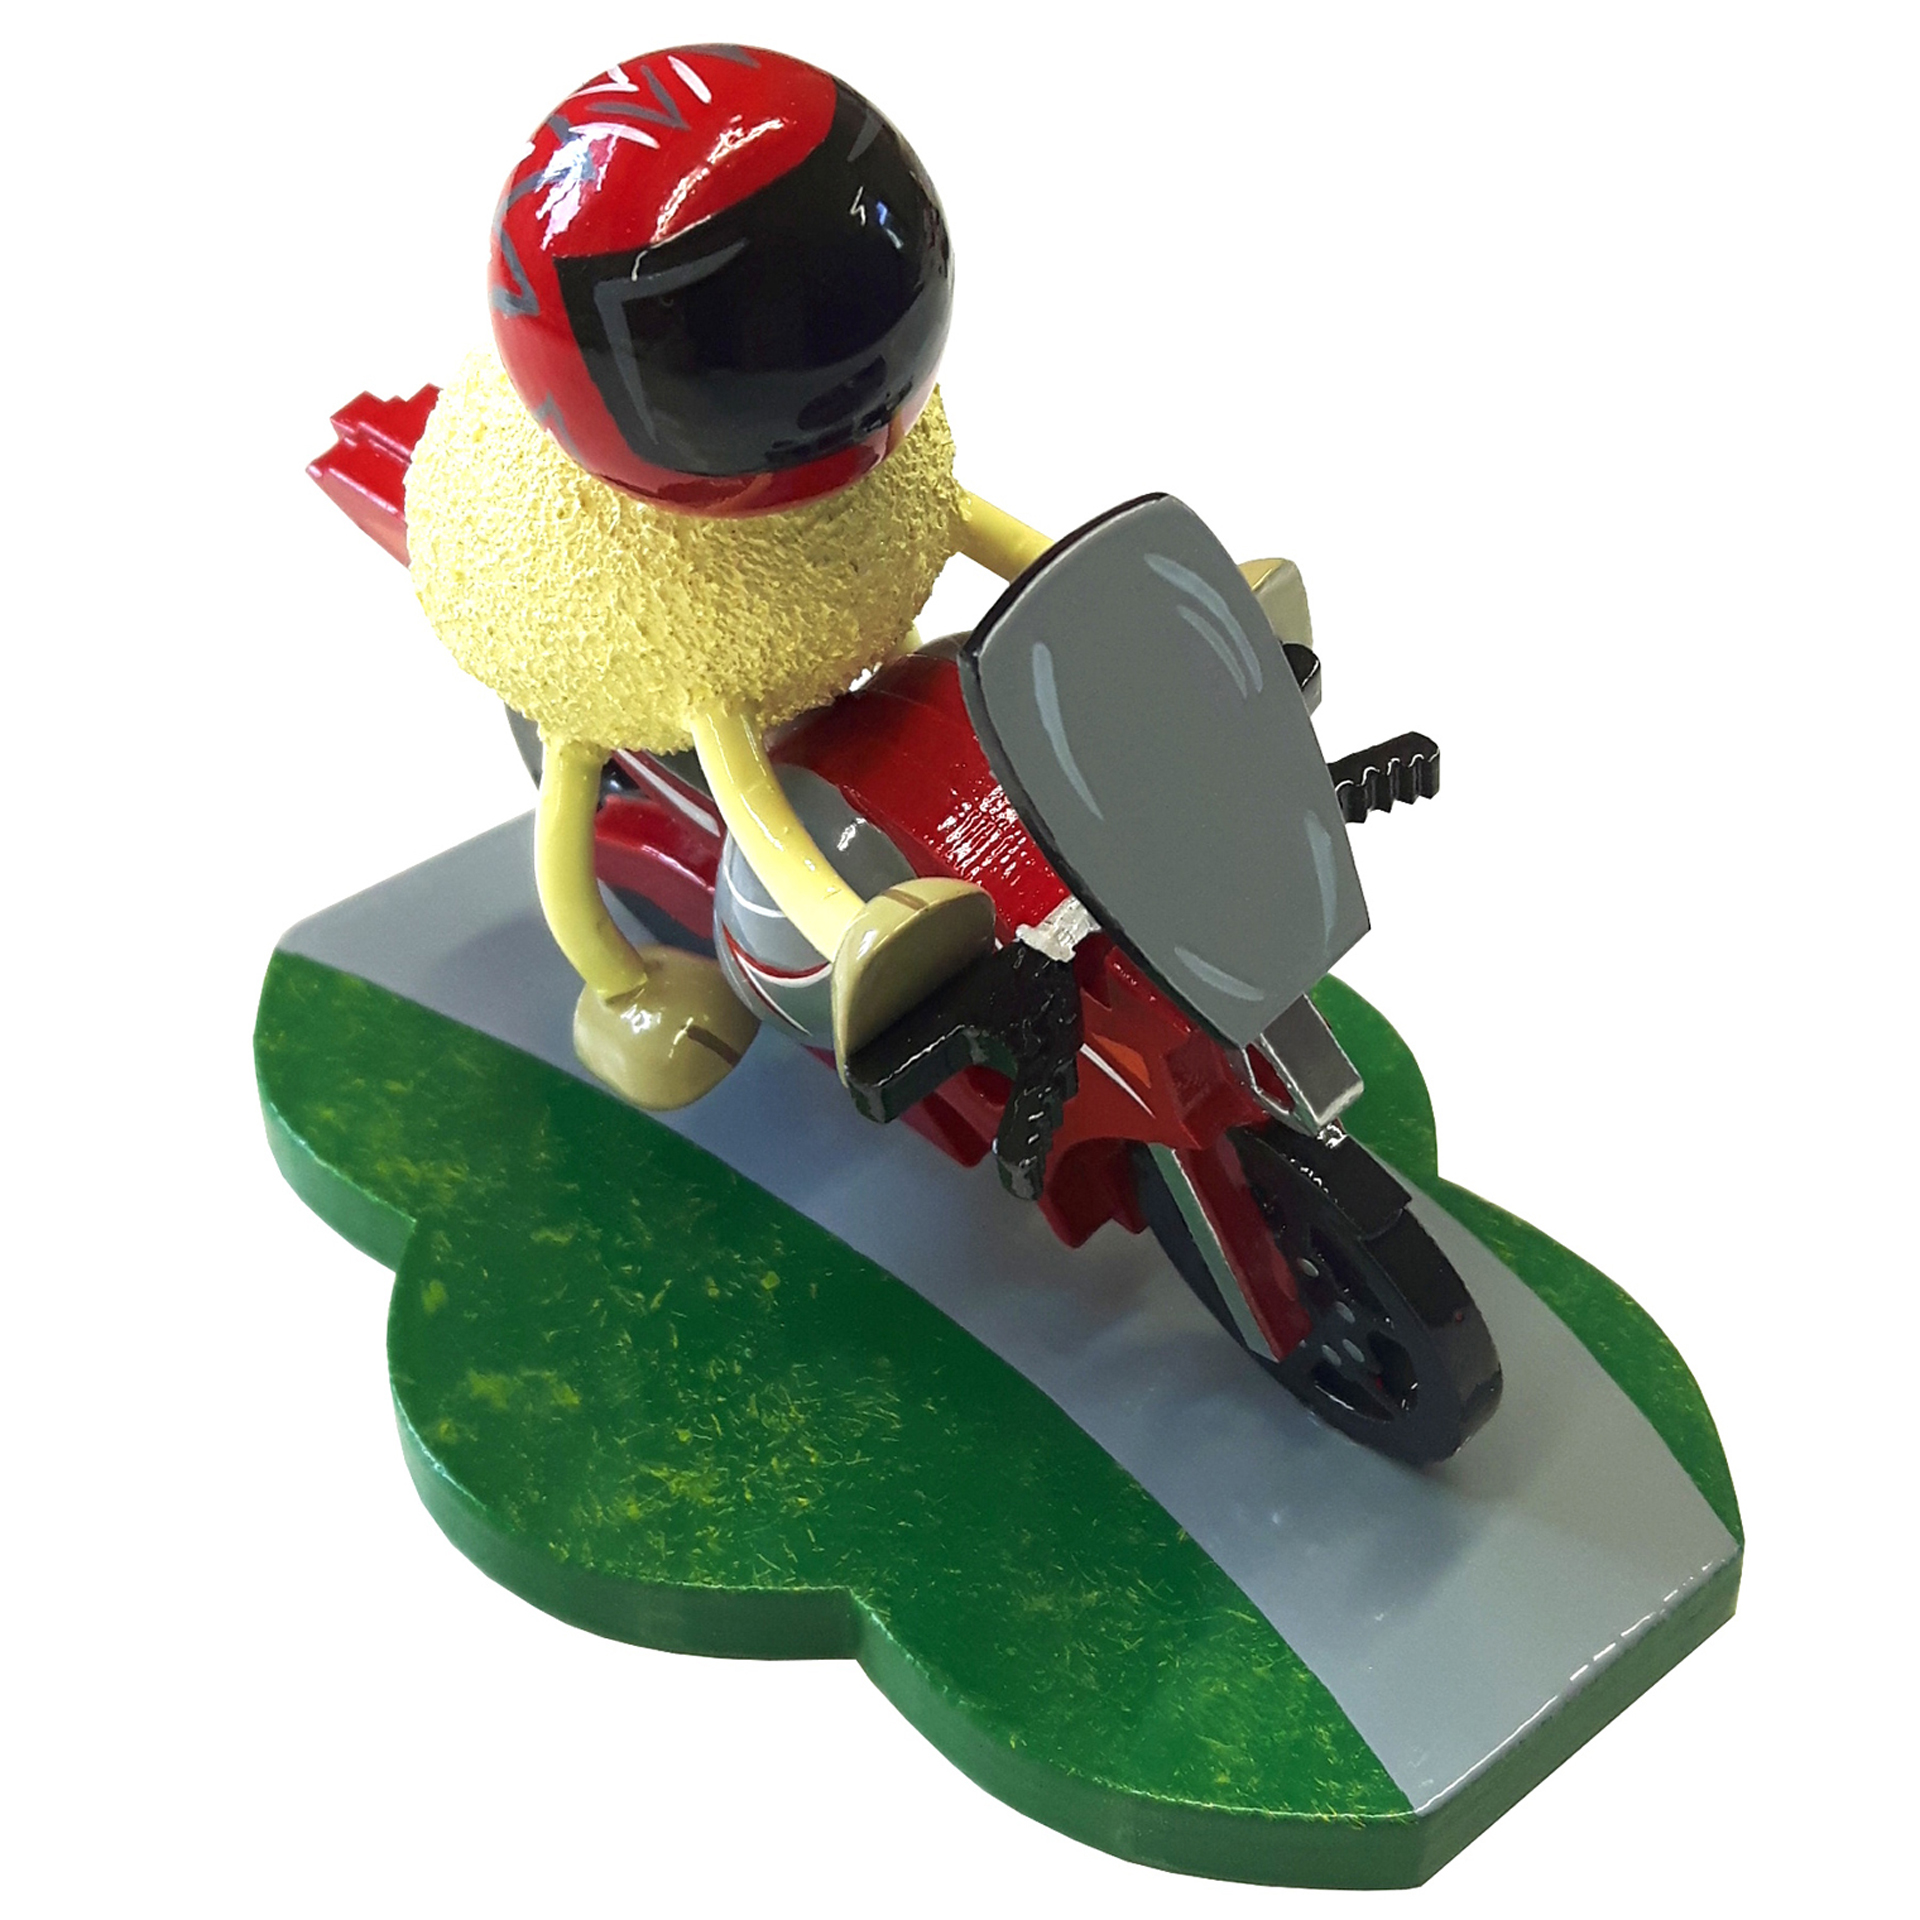 Schaf Racy mit rotem Motorrad 